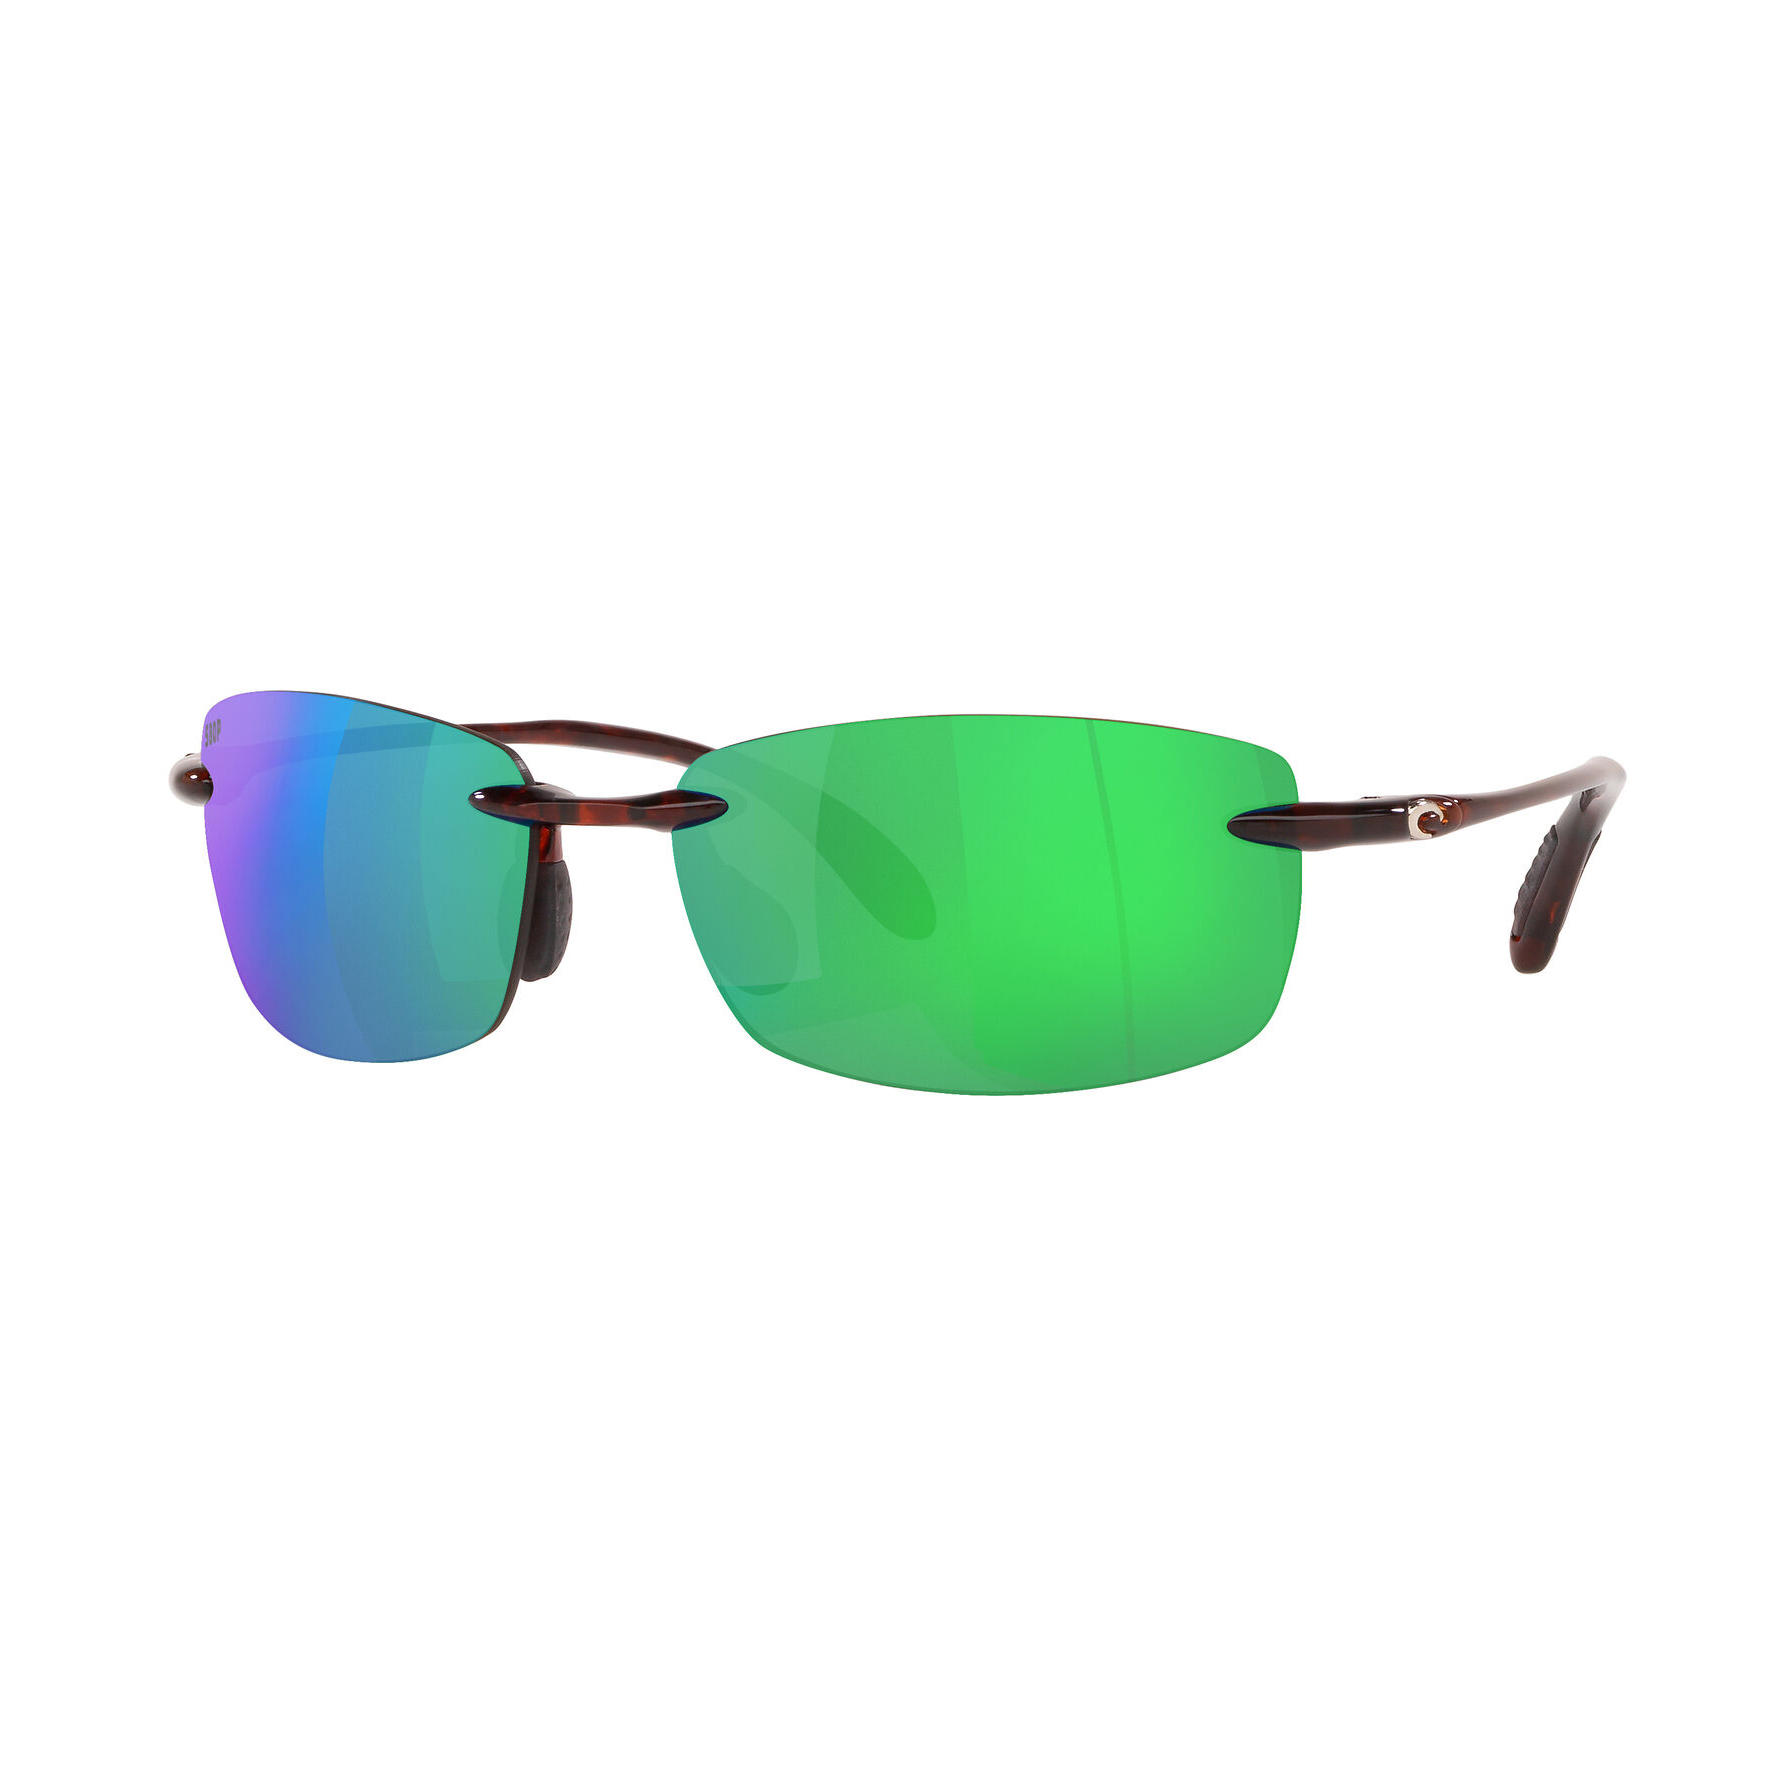 Costa Sunglasses, Ballast, Tortoise, Green Mirror, 580P